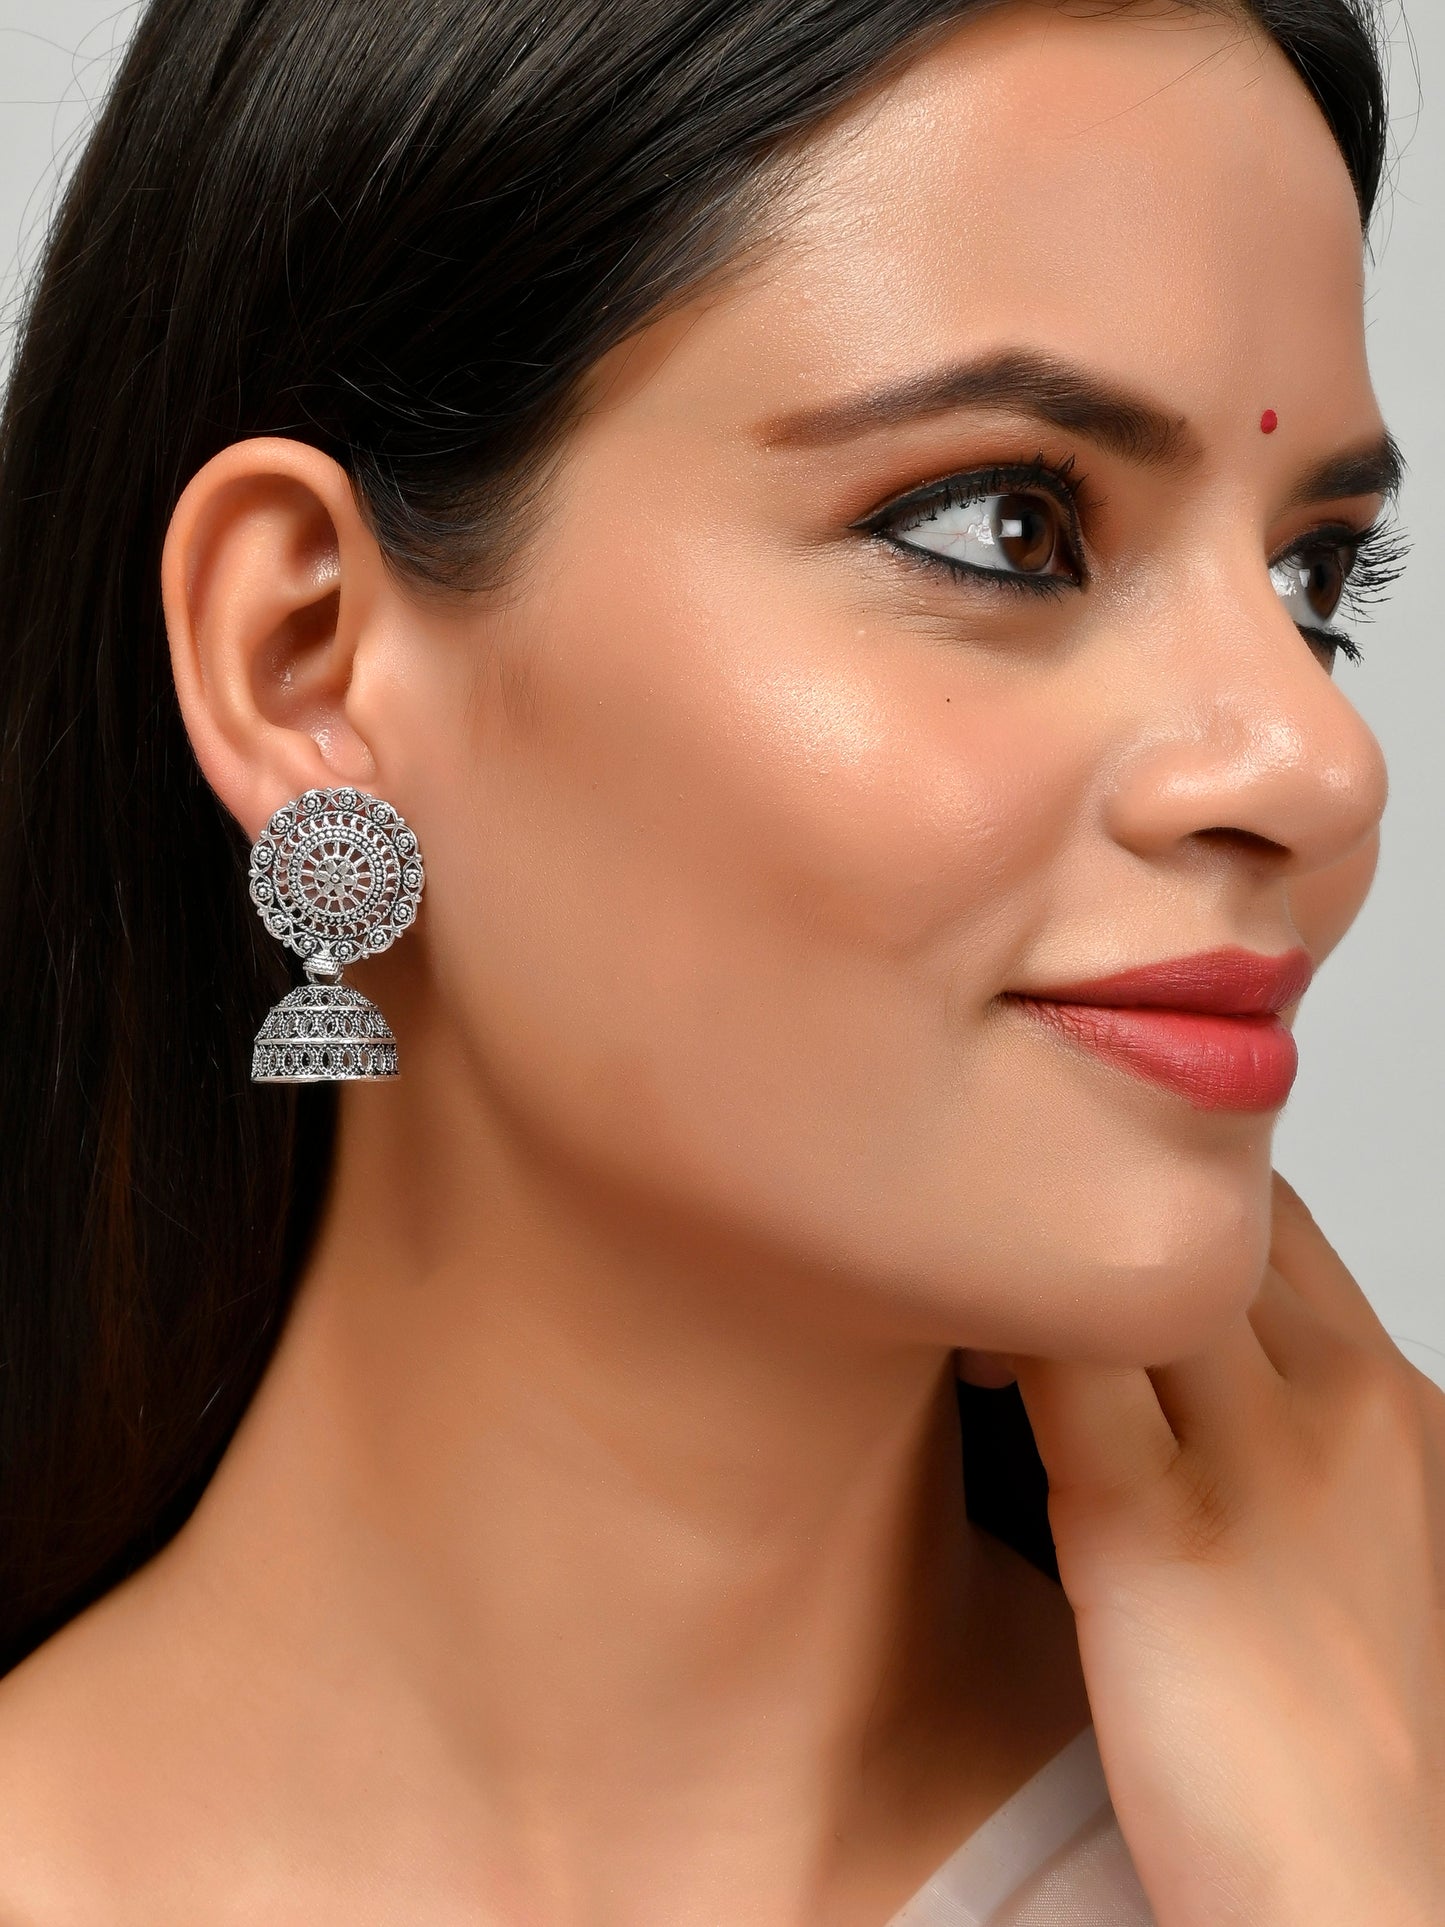 Silver Toned Contemporary Jhumka Earrings